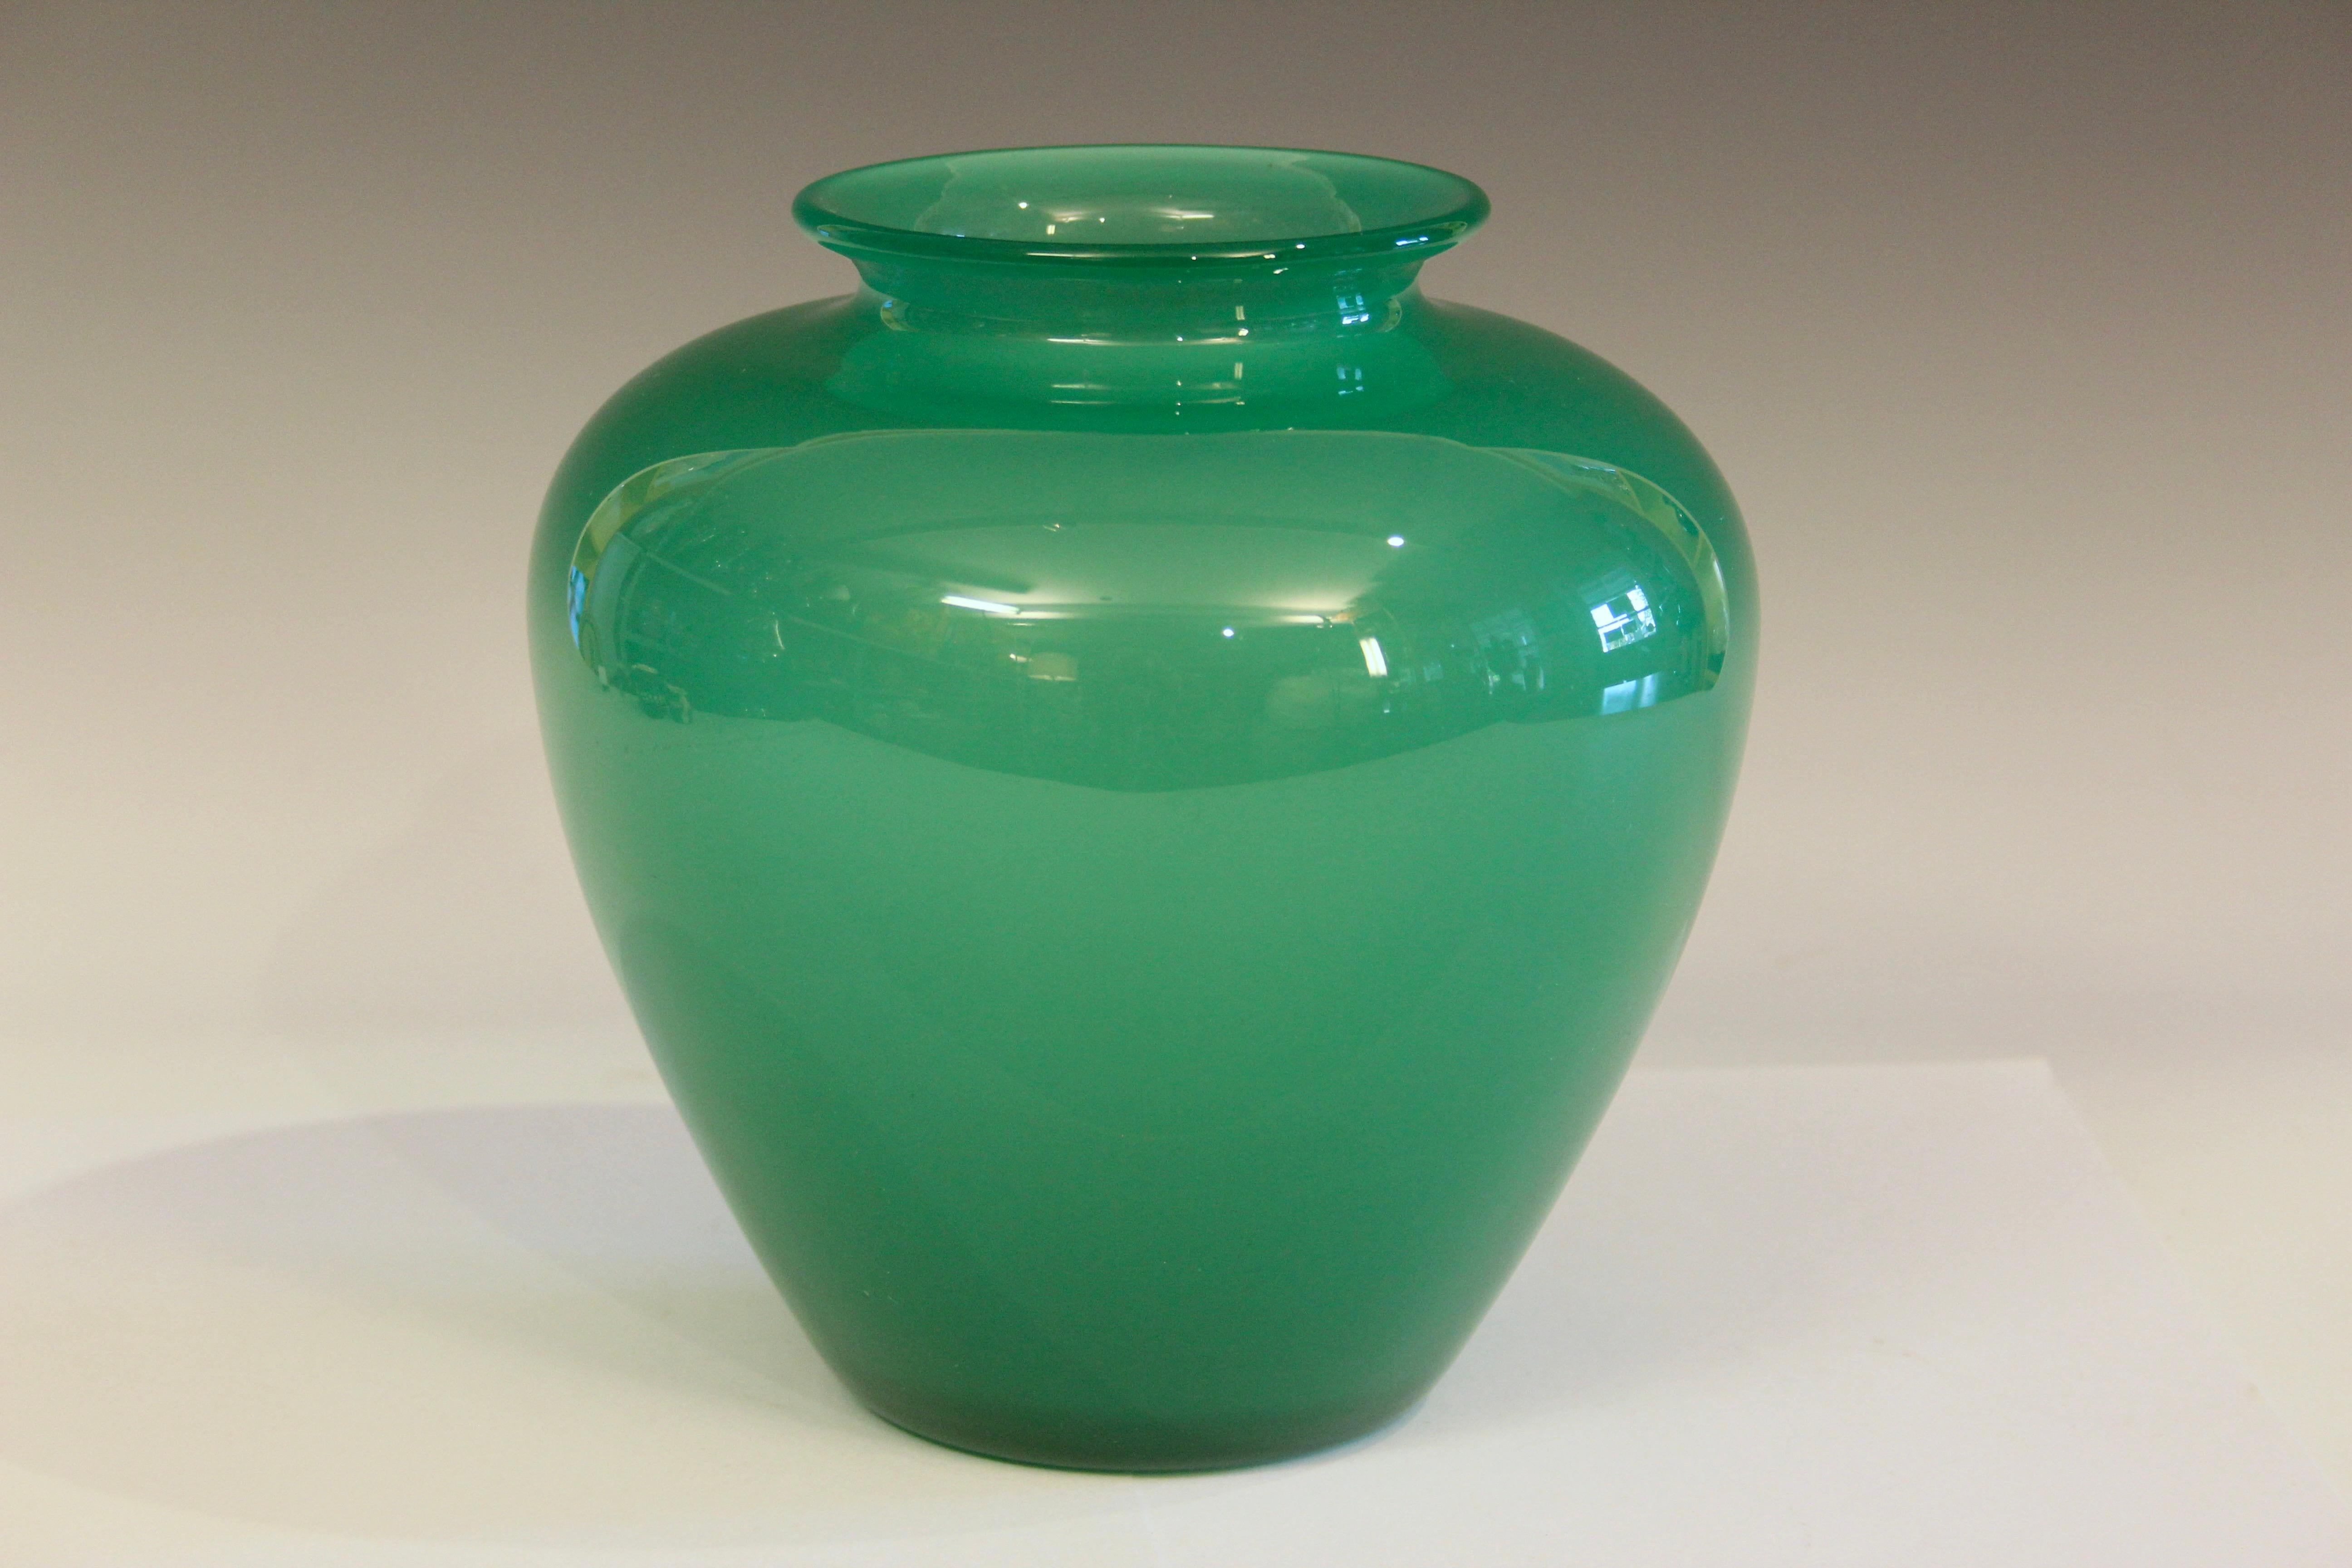 Vintage Steuben Glass jade green vase form #2683, circa 1930's. Measures: 7 3/4